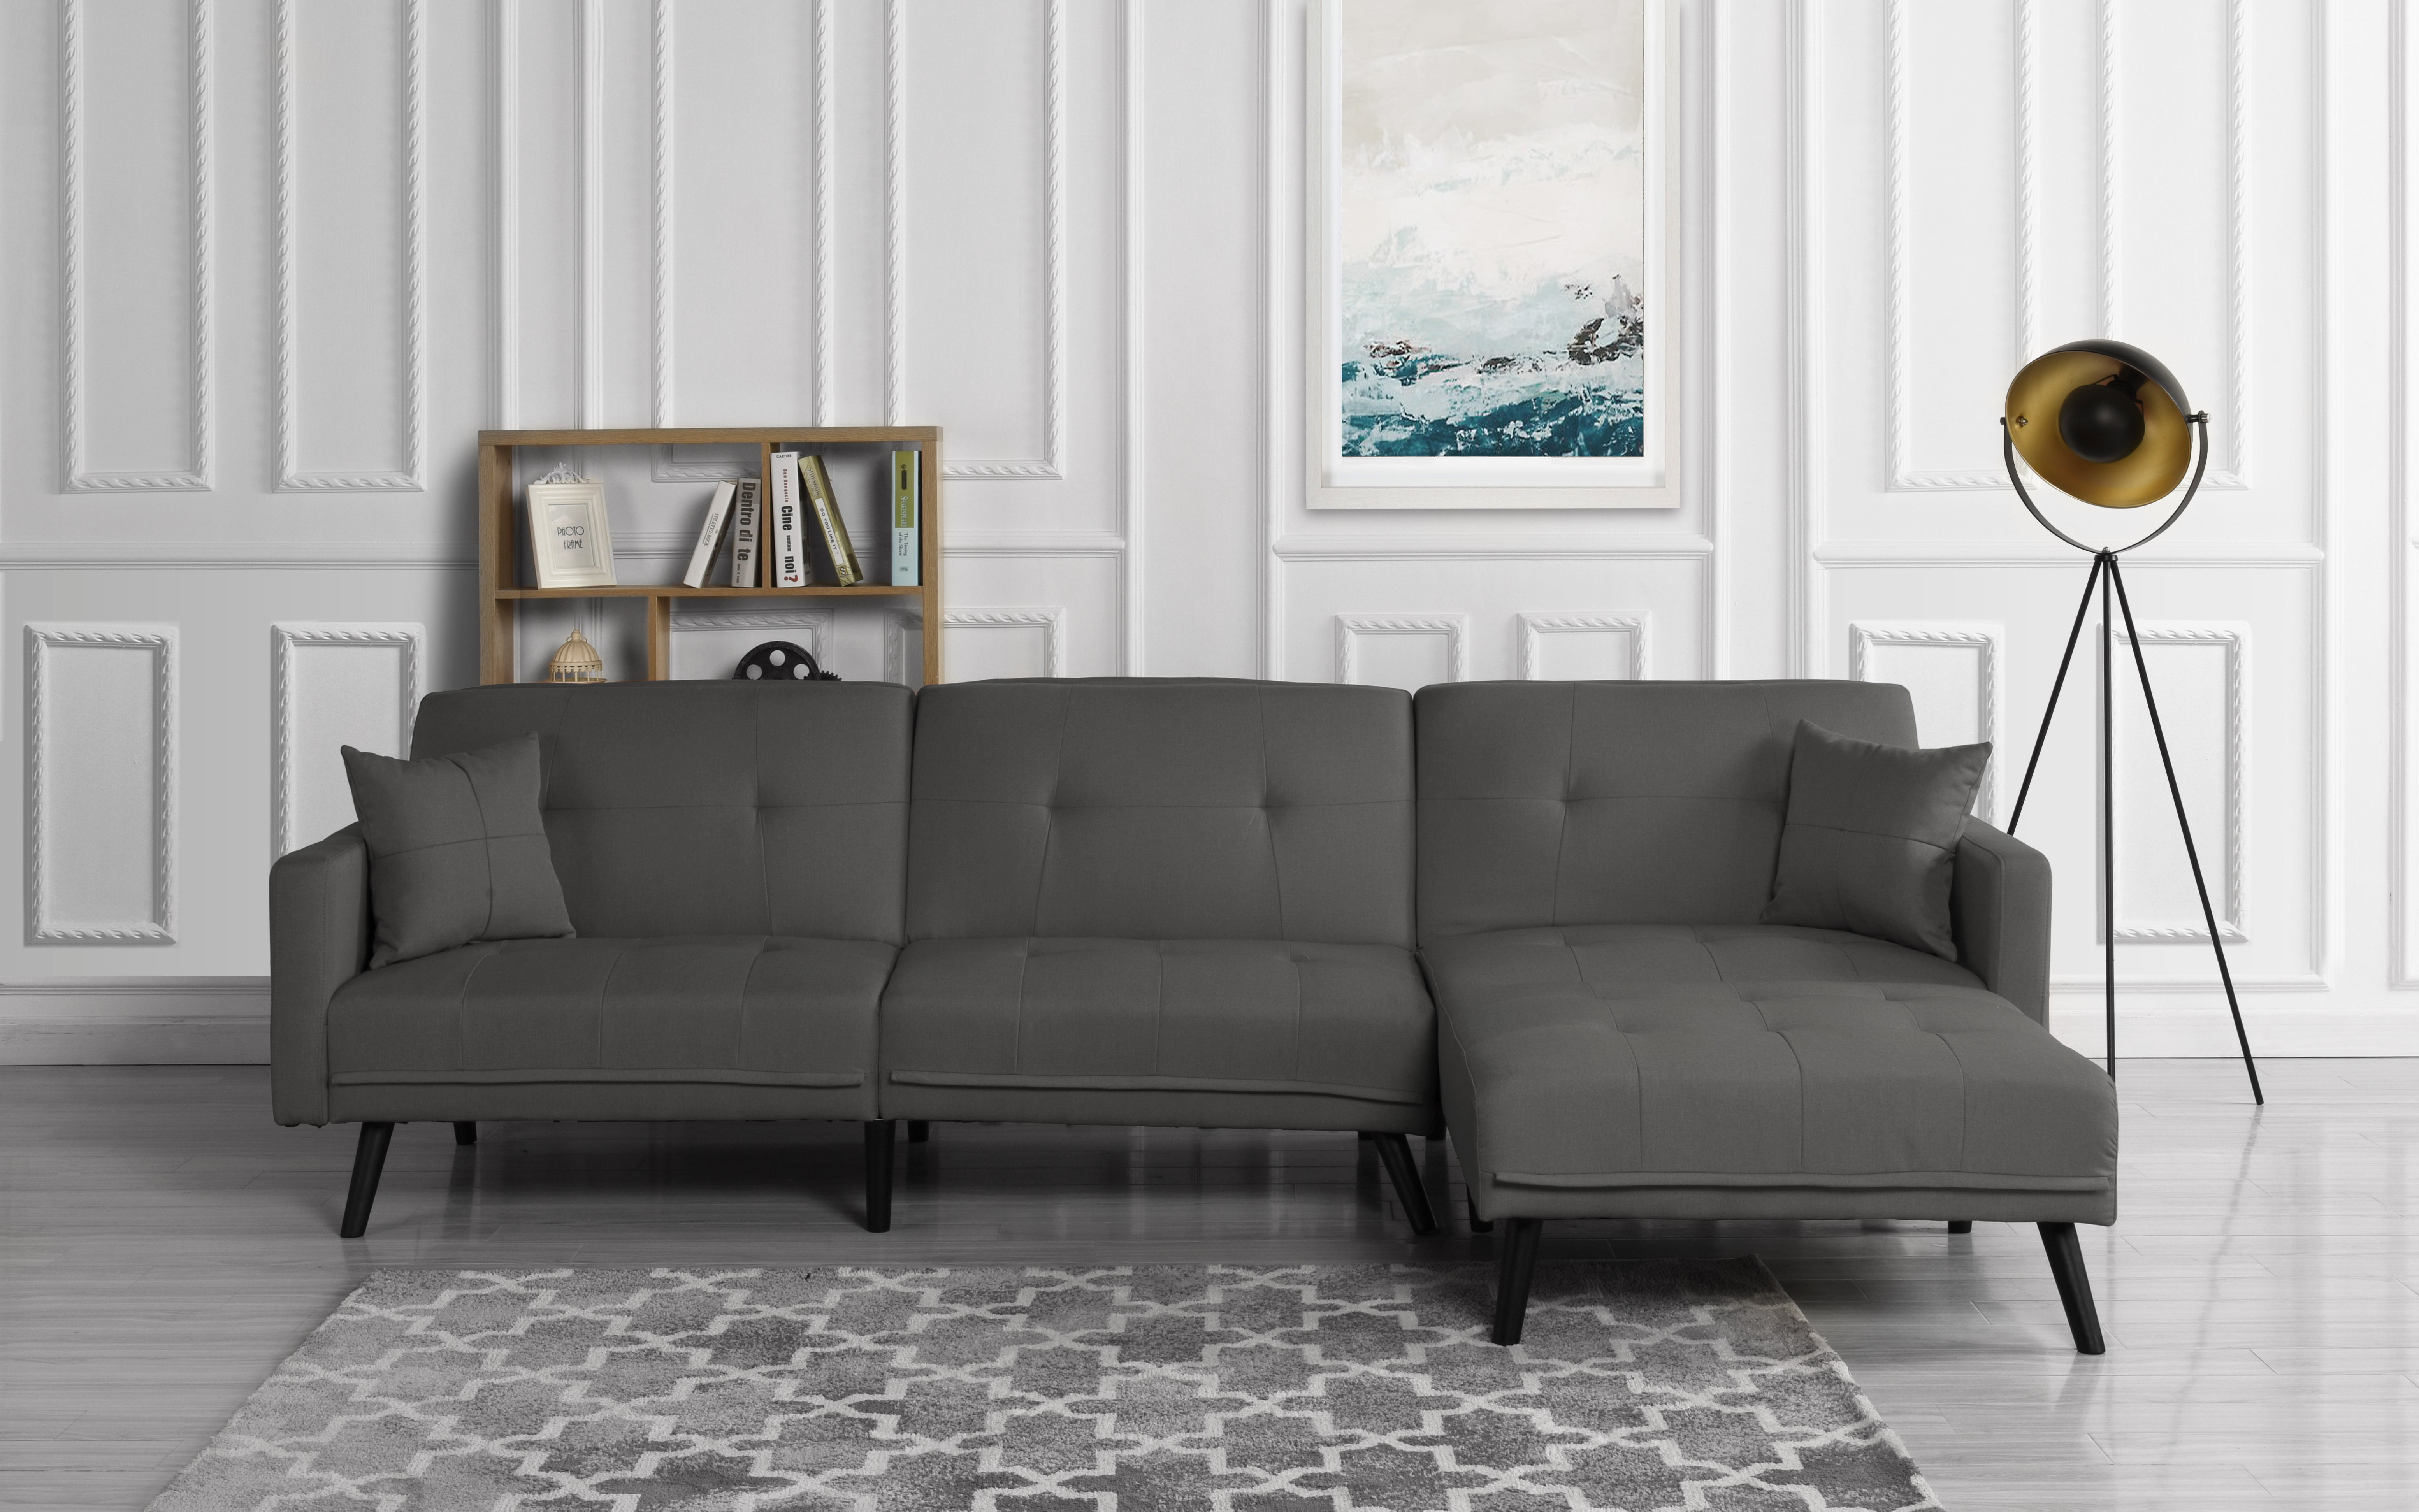 contemporary styled futon sleeper sofa bed